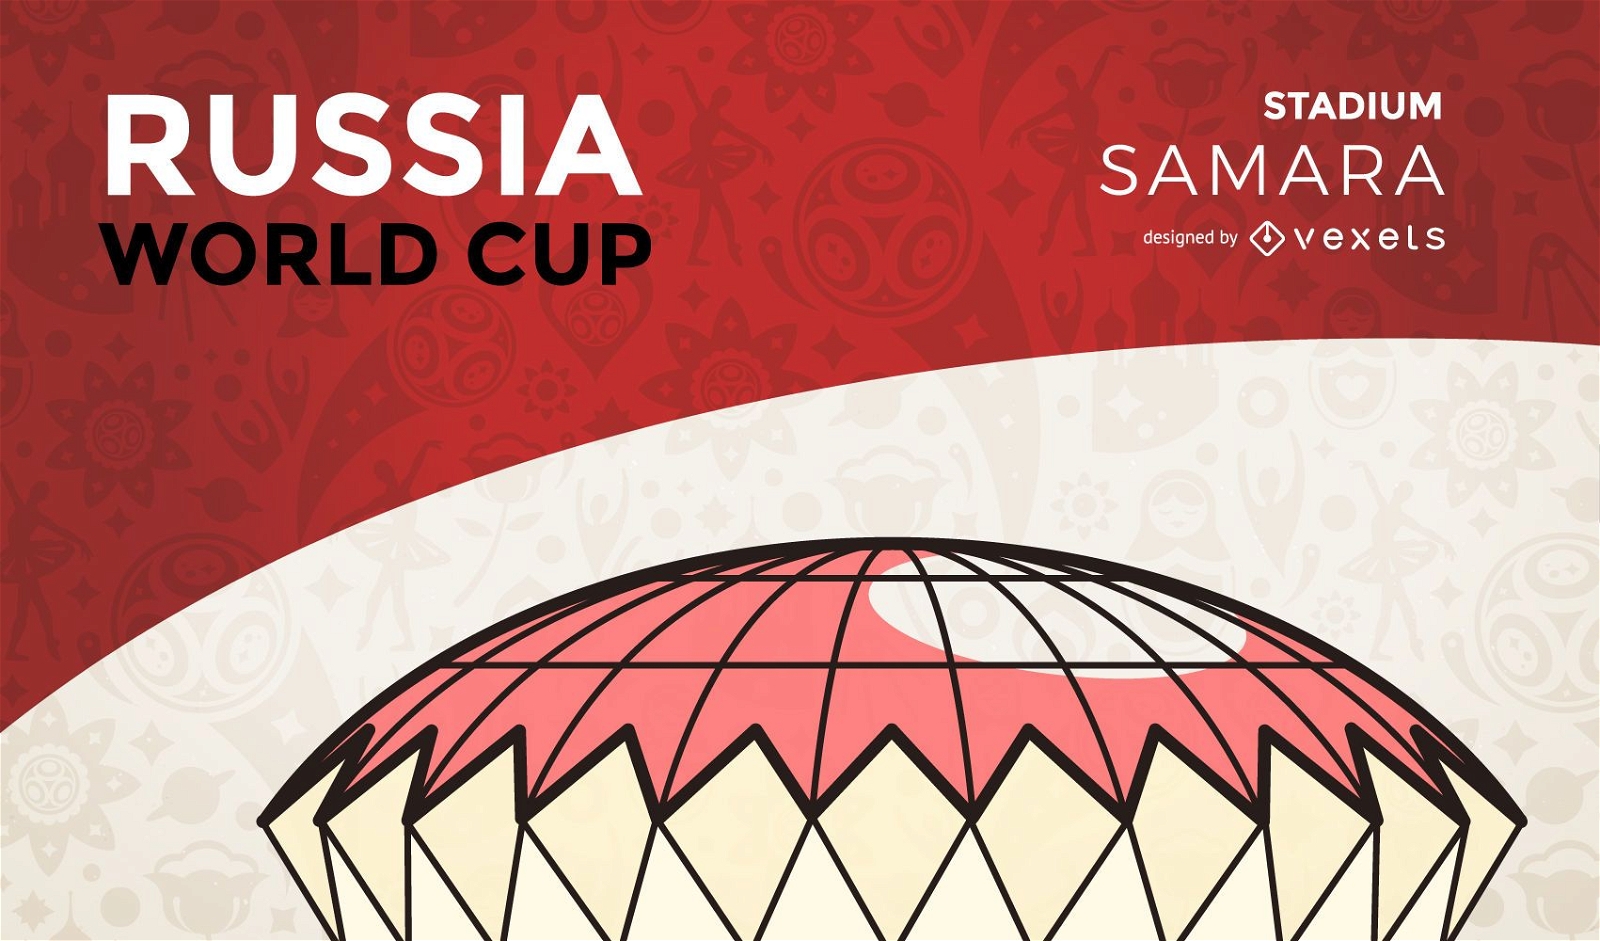 Samara world cup stadium